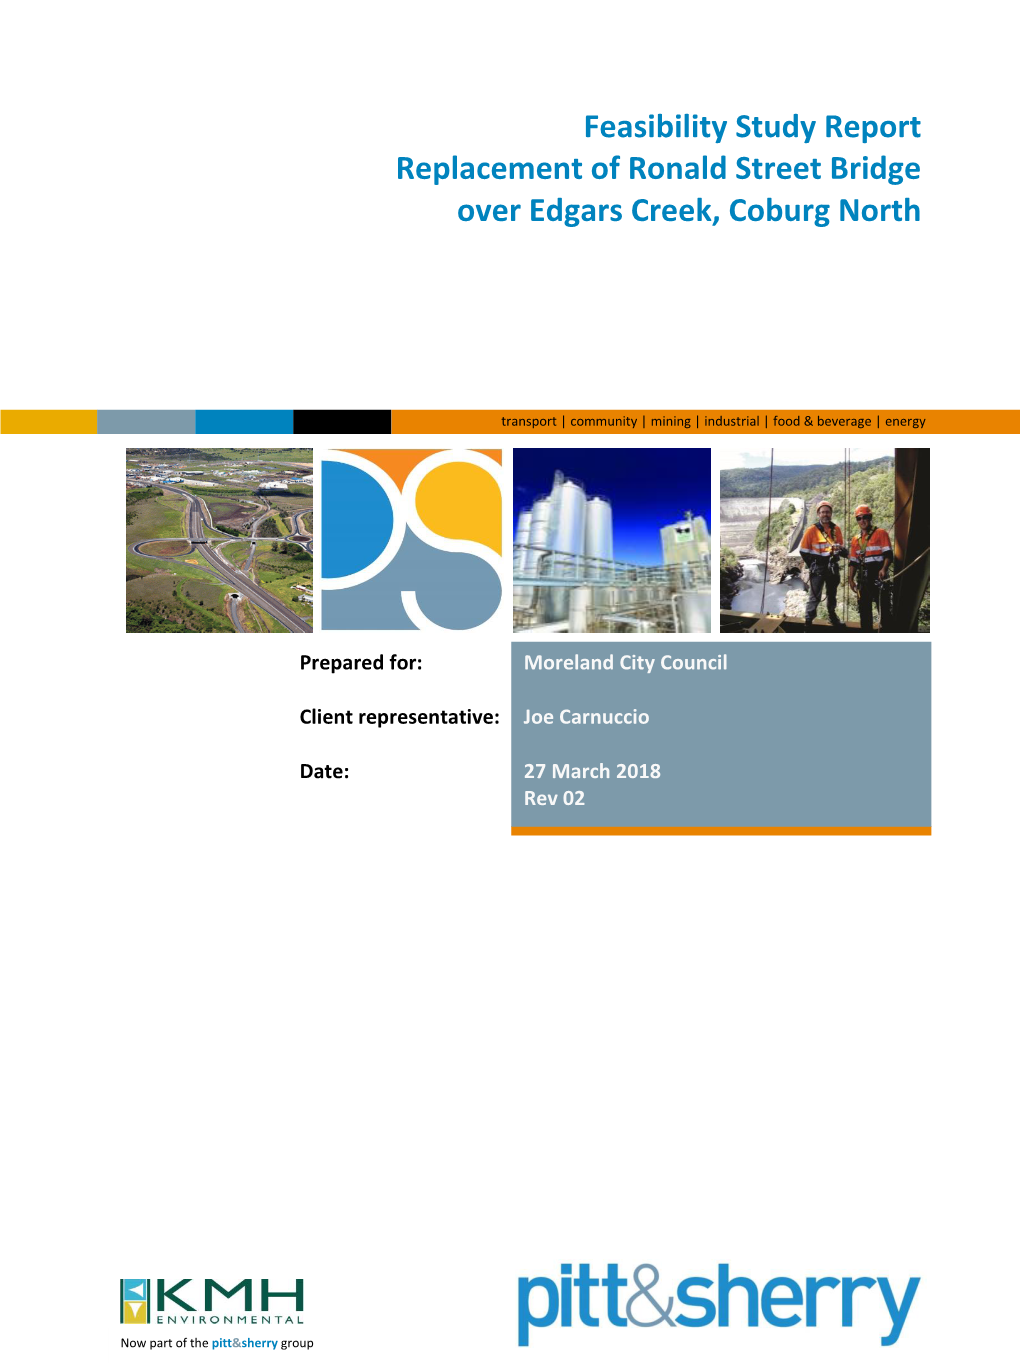 Feasibility Study Report Replacement of Ronald Street Bridge Over Edgars Creek, Coburg North